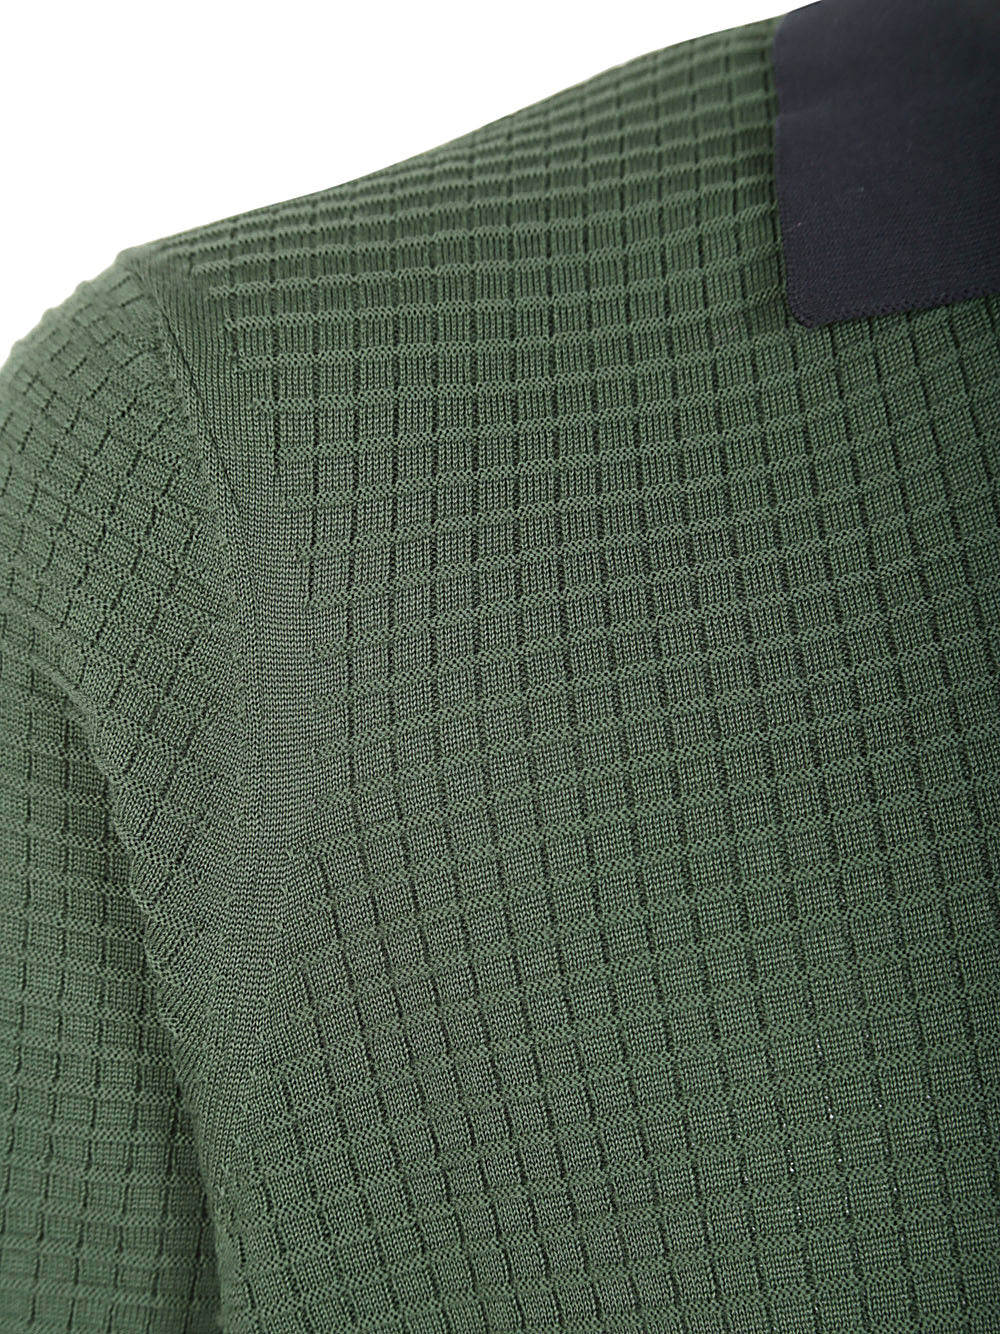 3/4 Sleeves Sweater